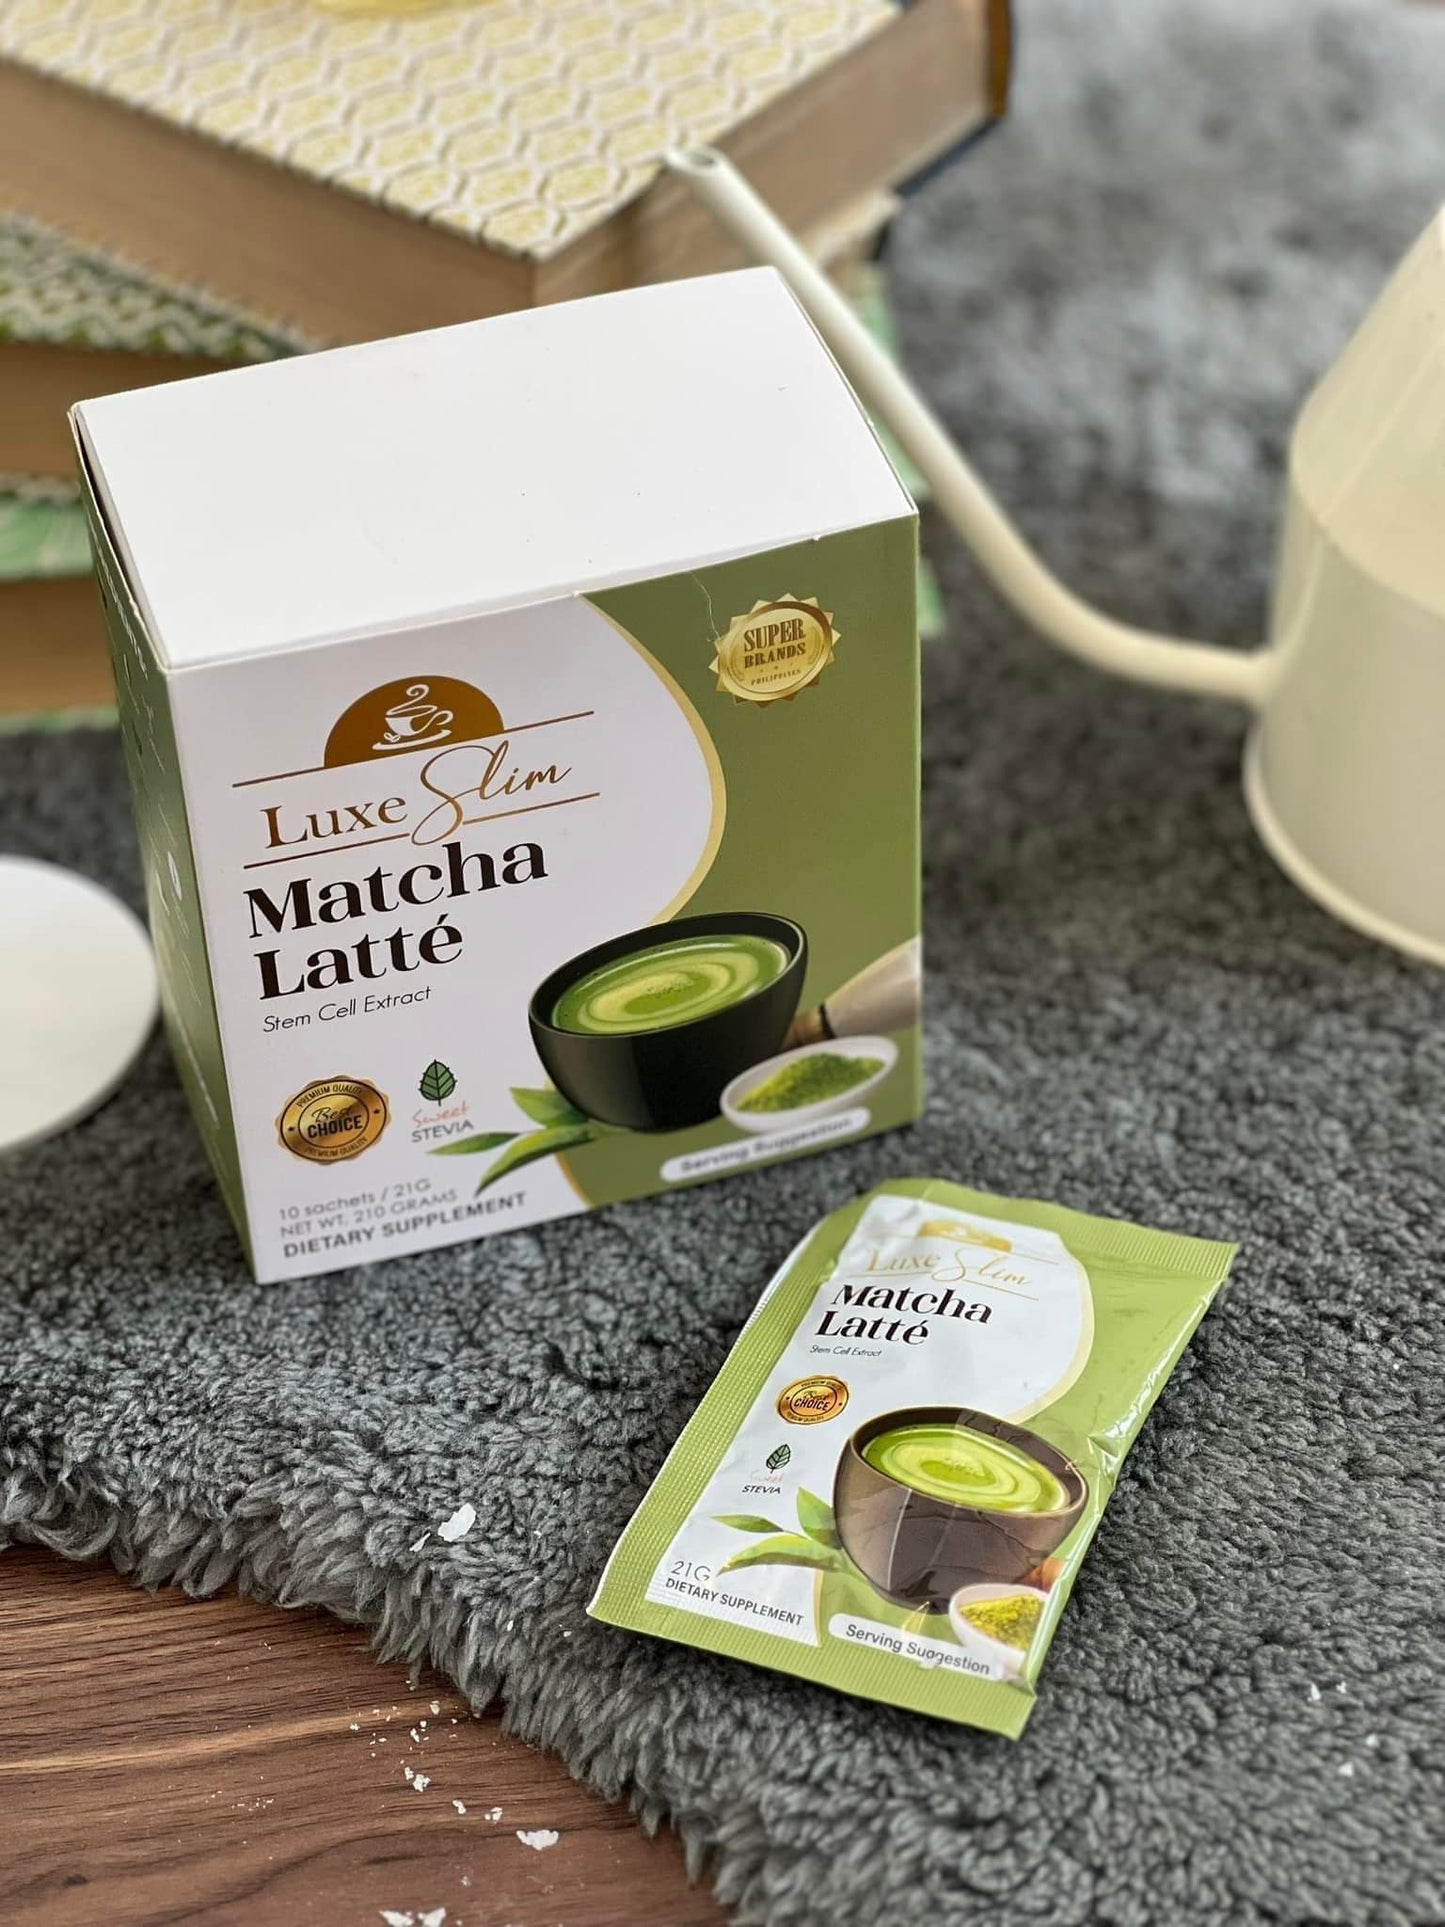 Luxe Slim Matcha Latte ( 21g x 10 sachets)